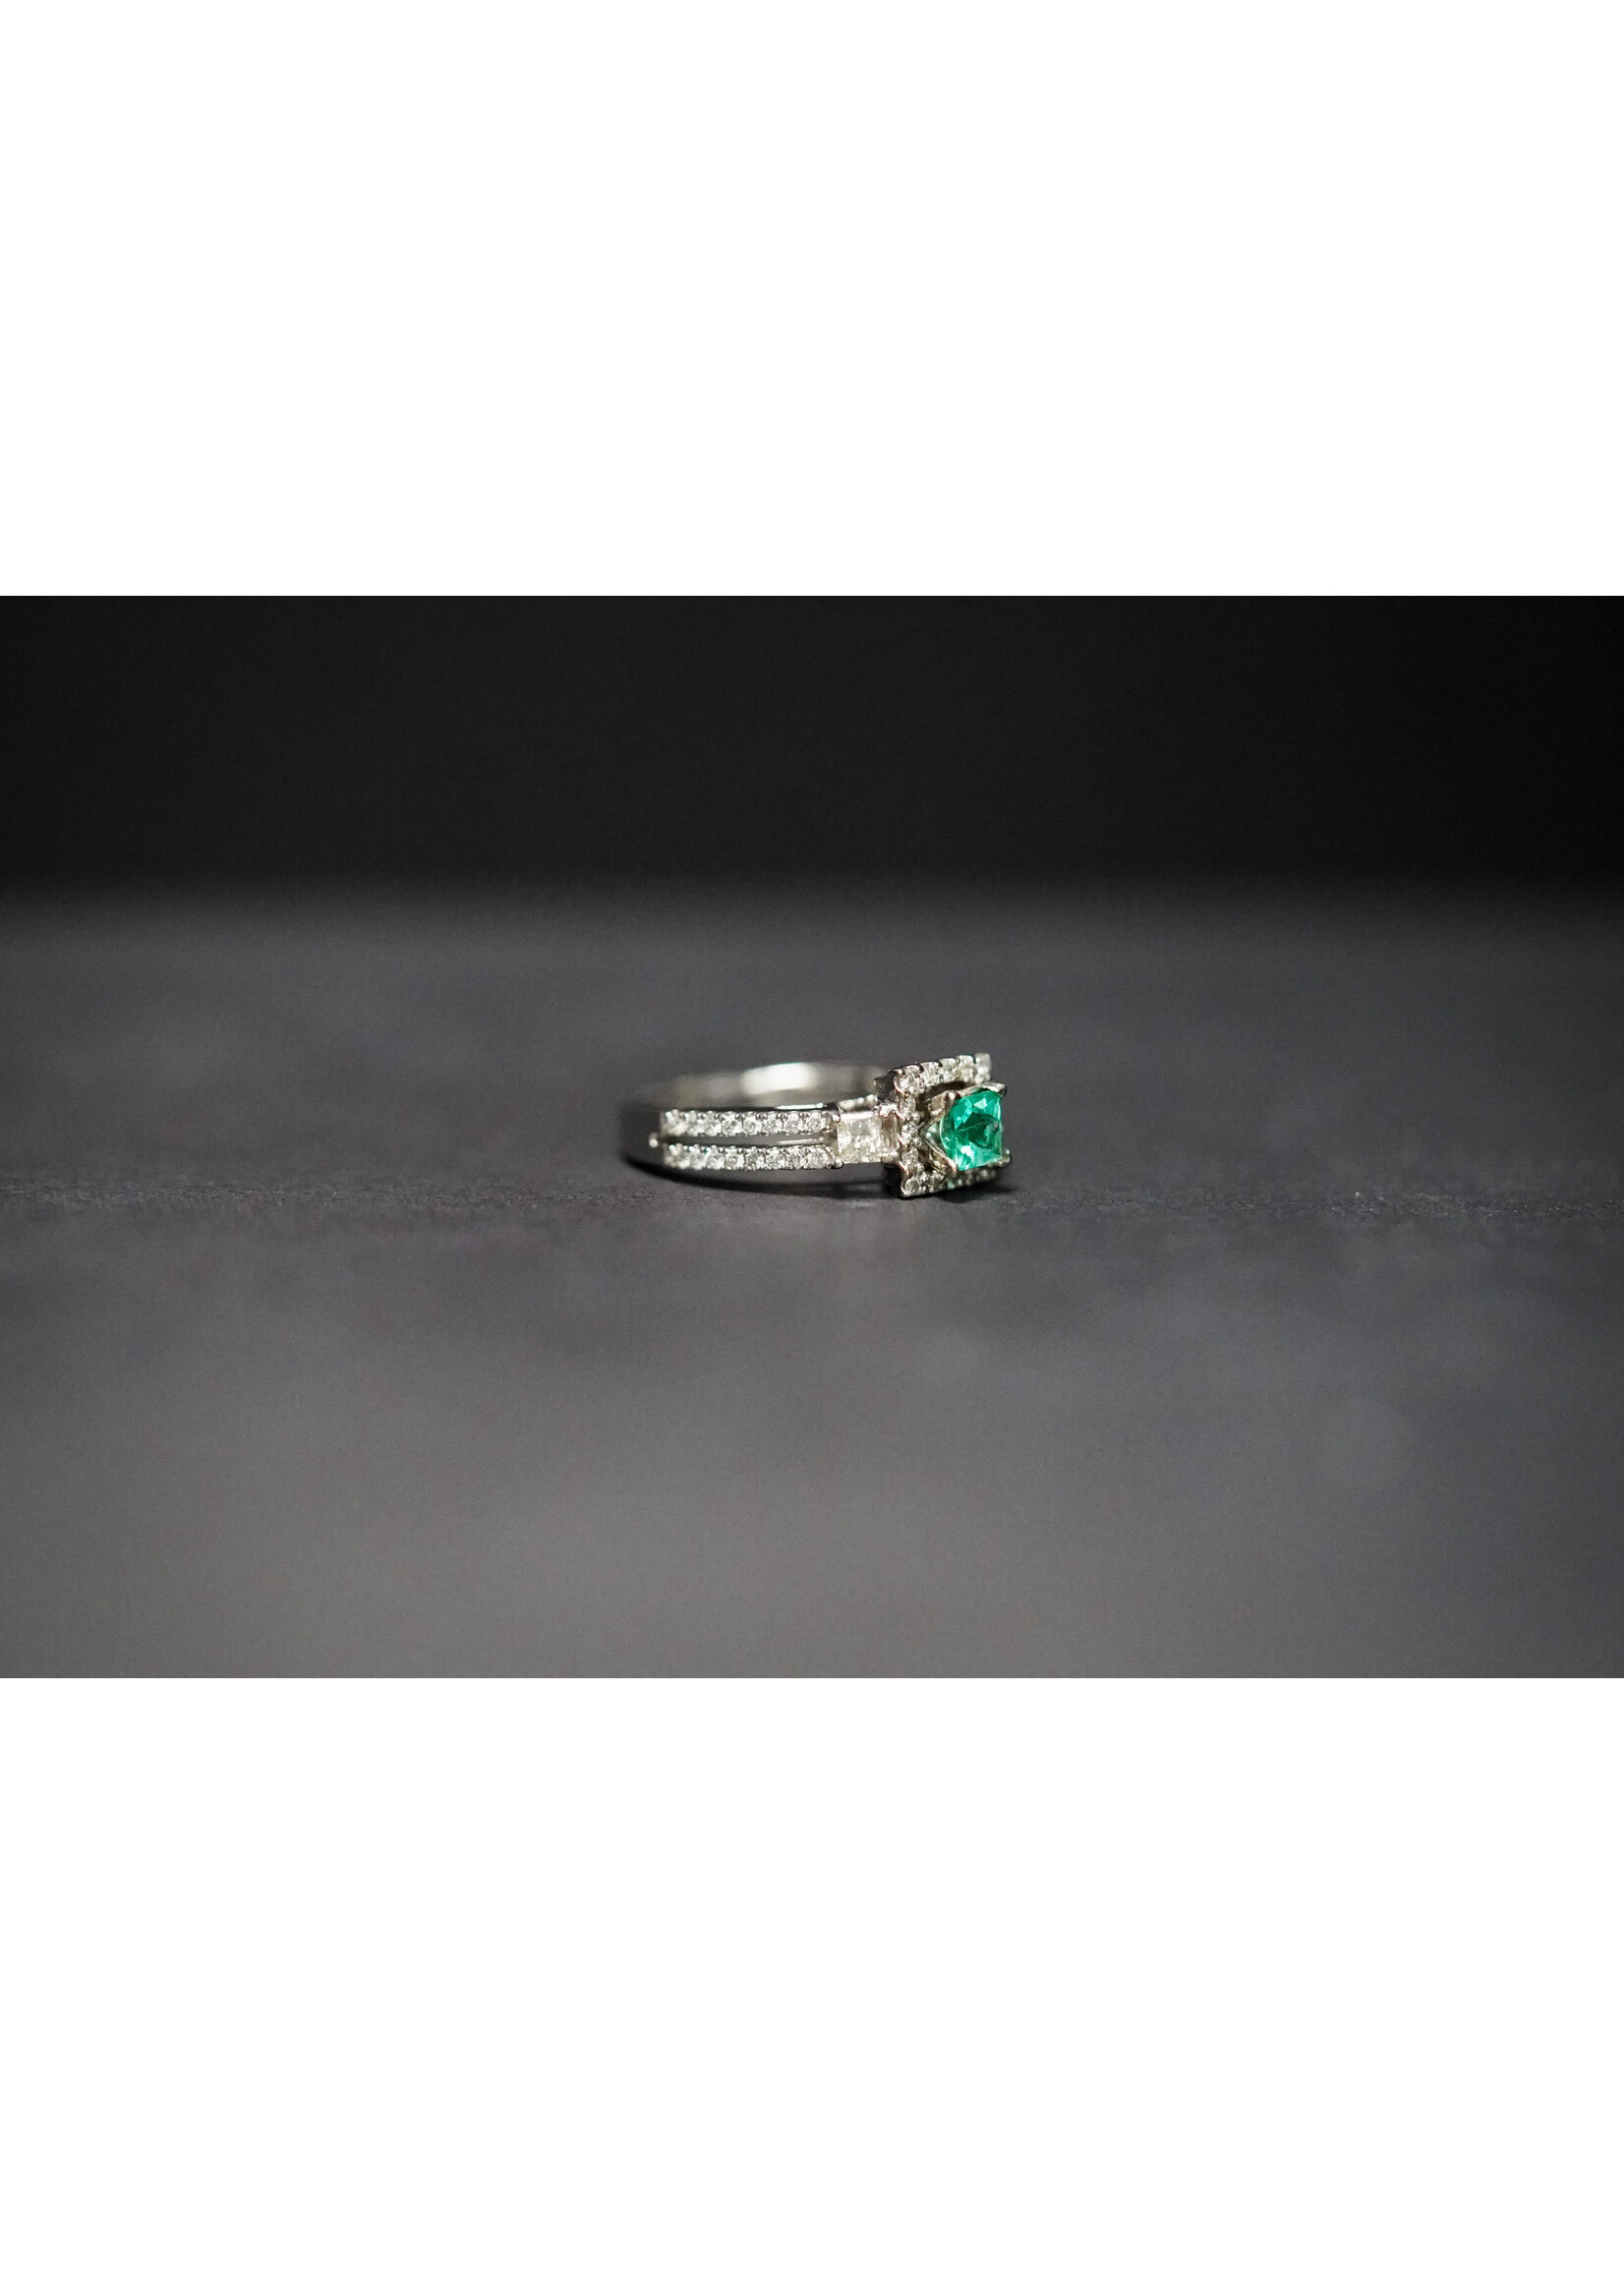 14KW 4.7g 1.50ctw (.85ctr) Emerald & Diamond Halo Ring (size 7)